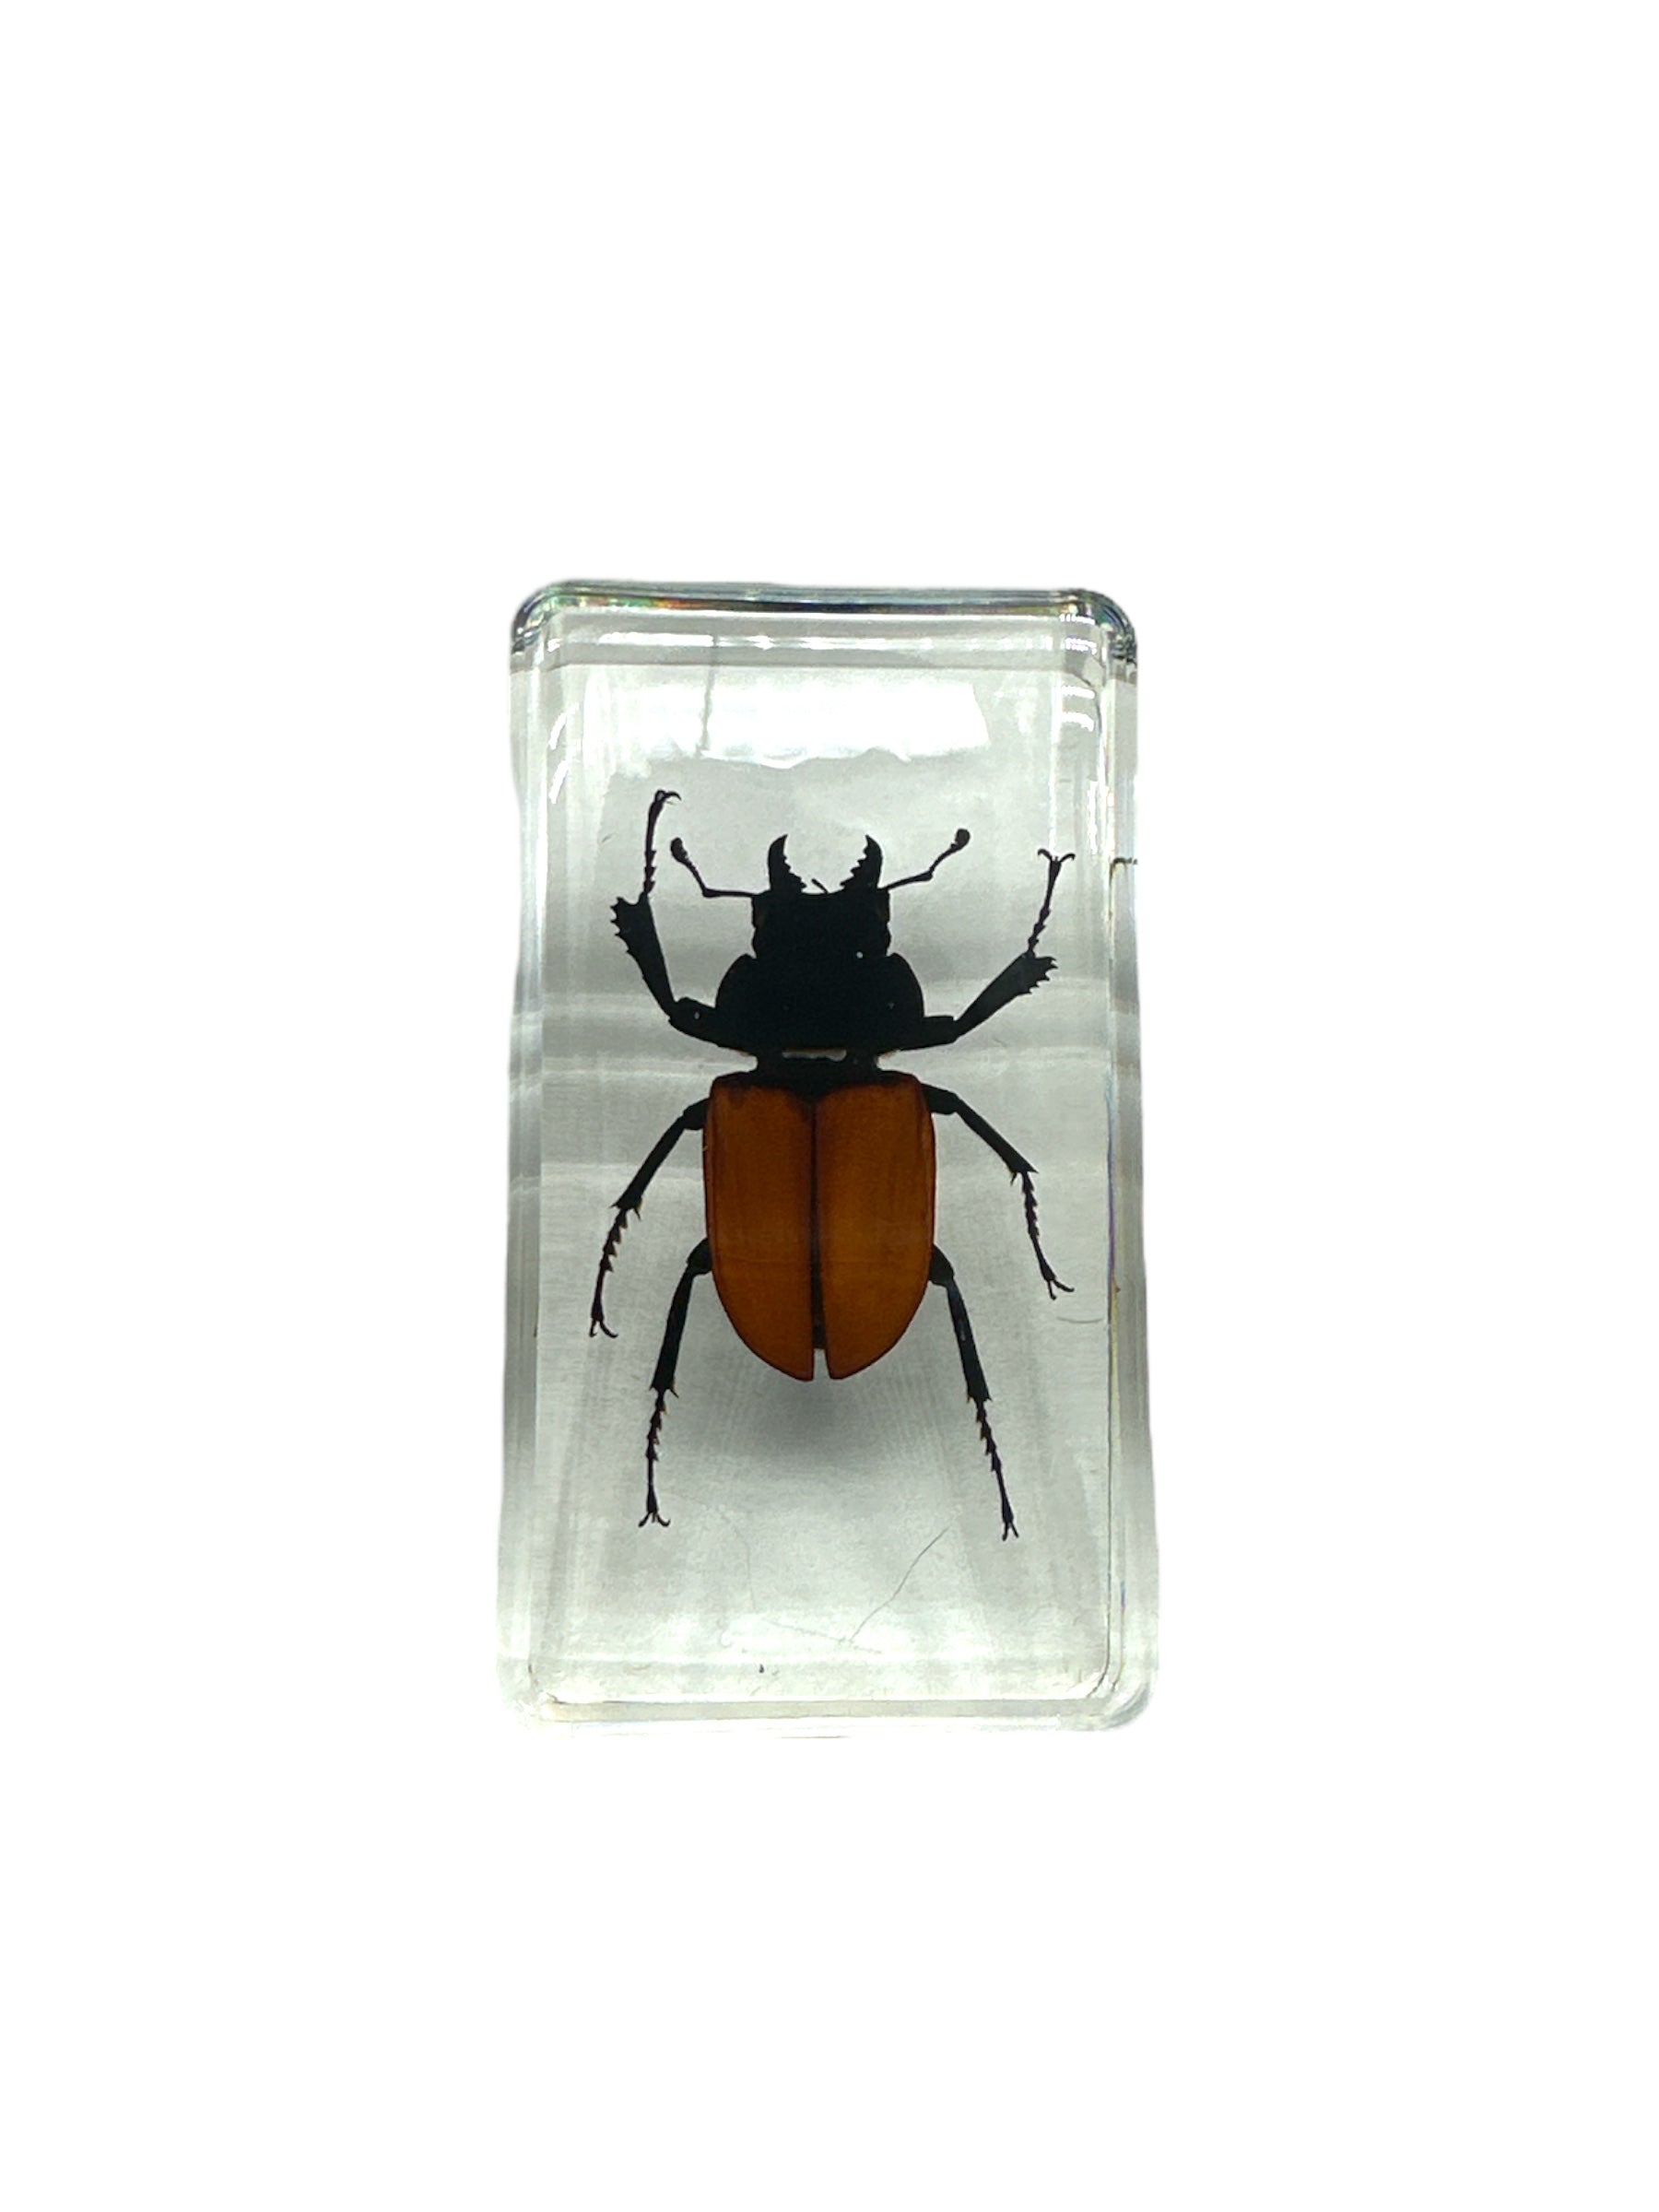 Stag Beetle - Specimen In Resin